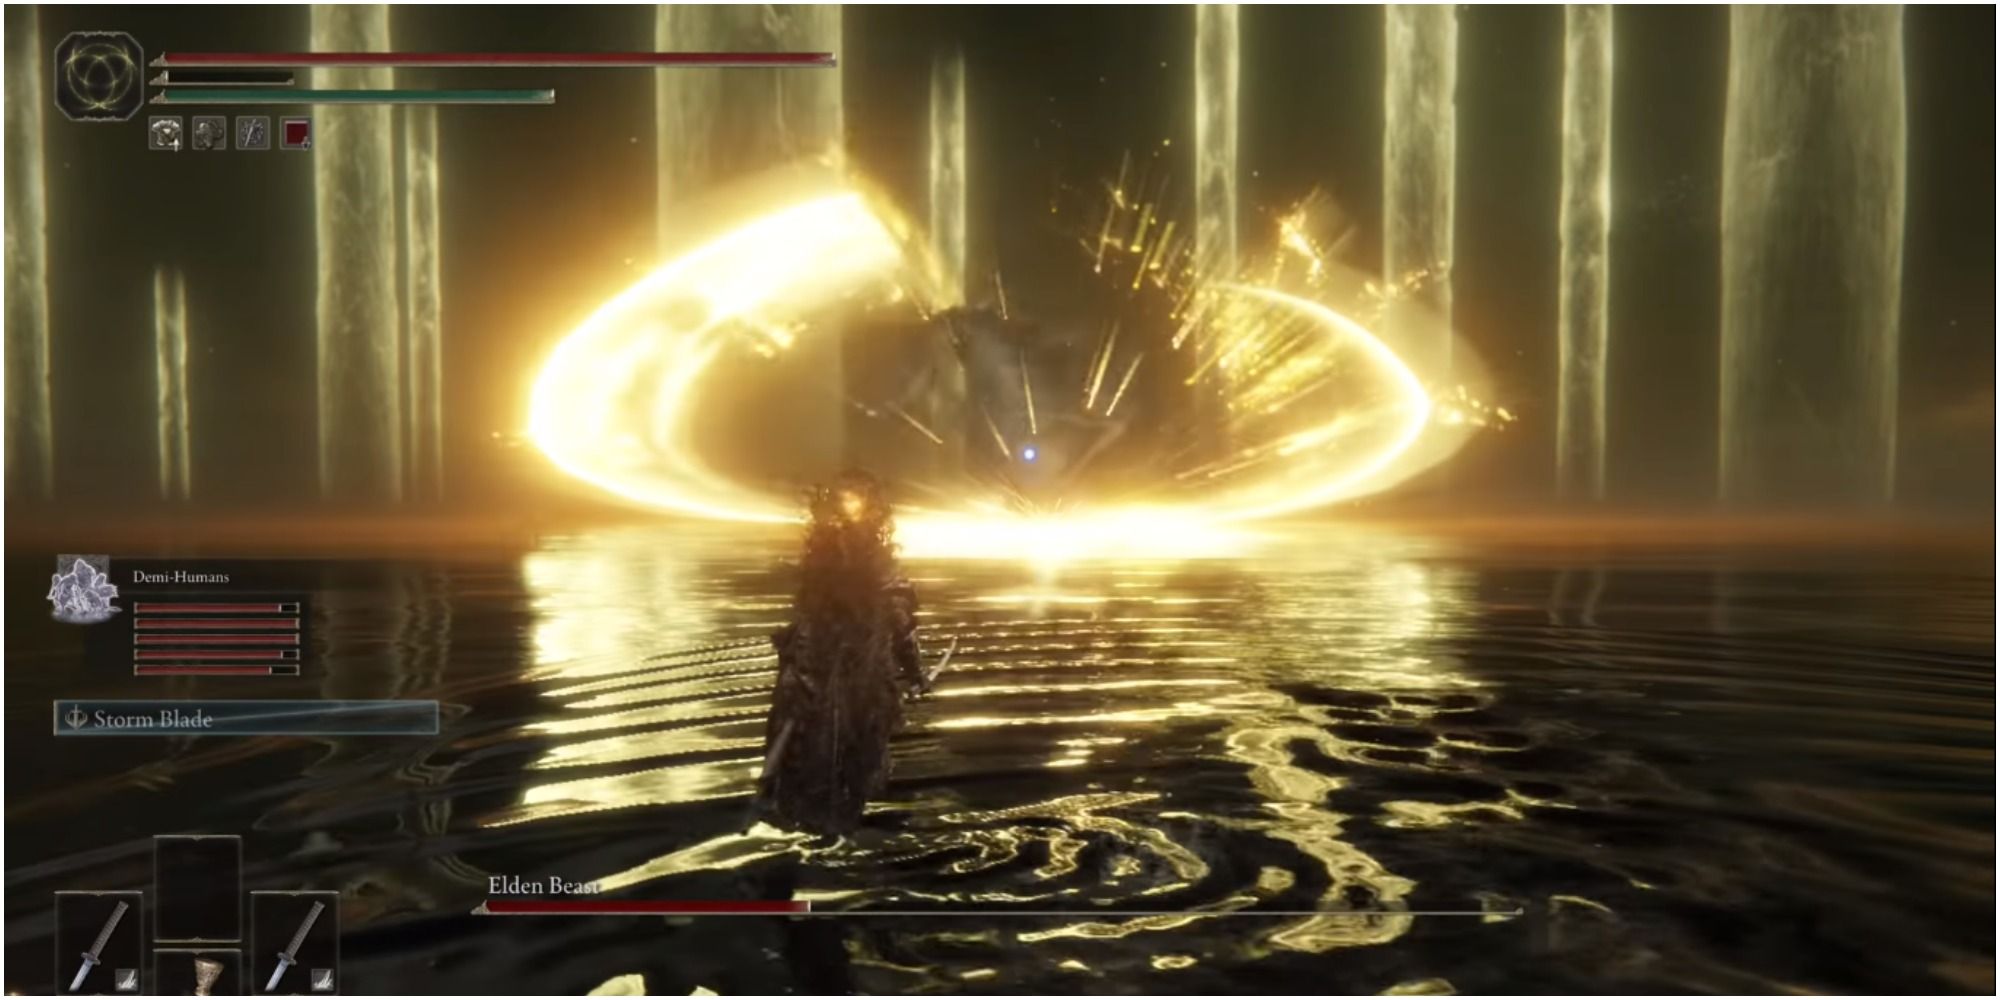 Elden Beast shooting holy beams through its Sword.